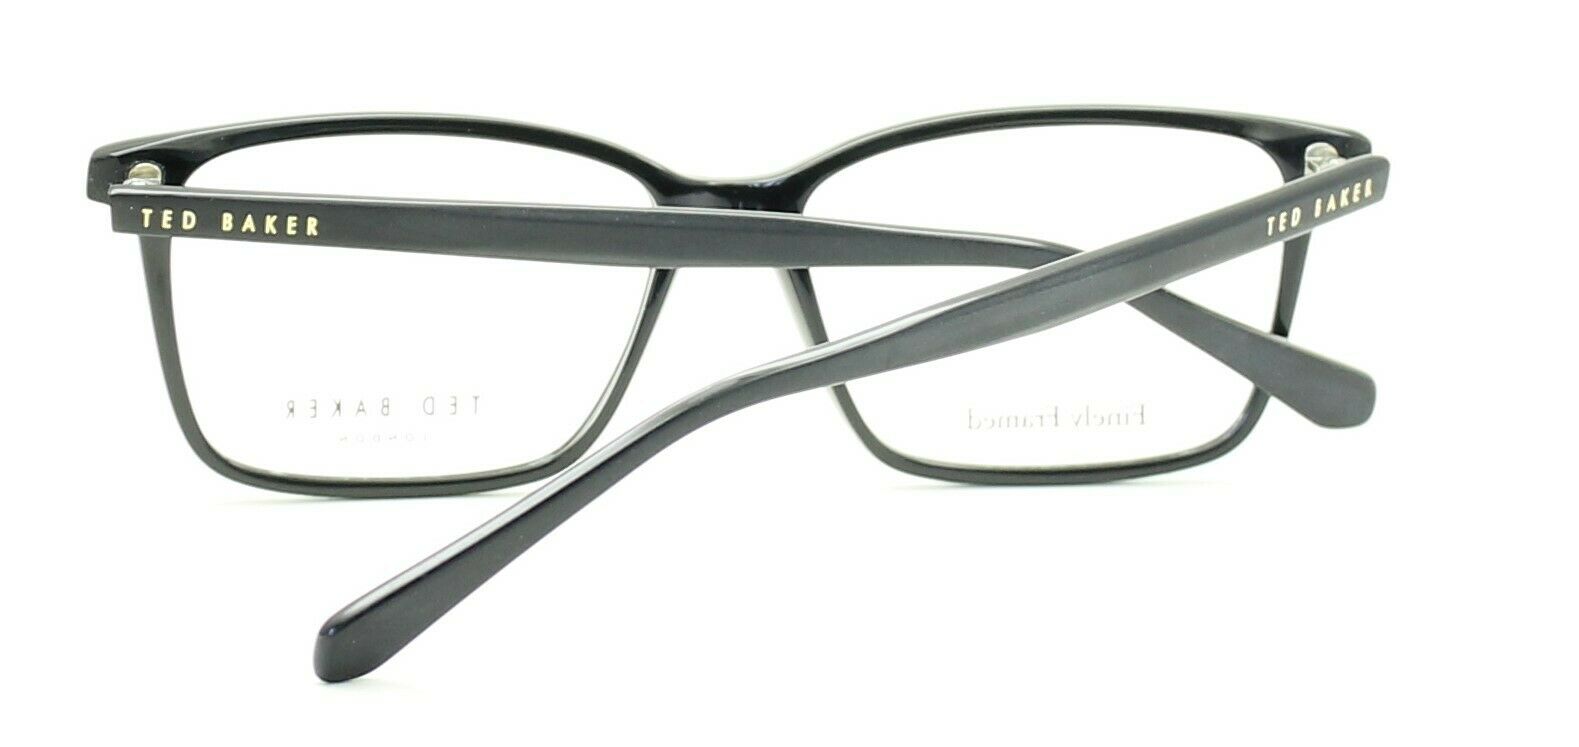 TED BAKER Axel 8119 001 54mm Eyewear FRAMES Glasses Eyeglasses RX Optical - New